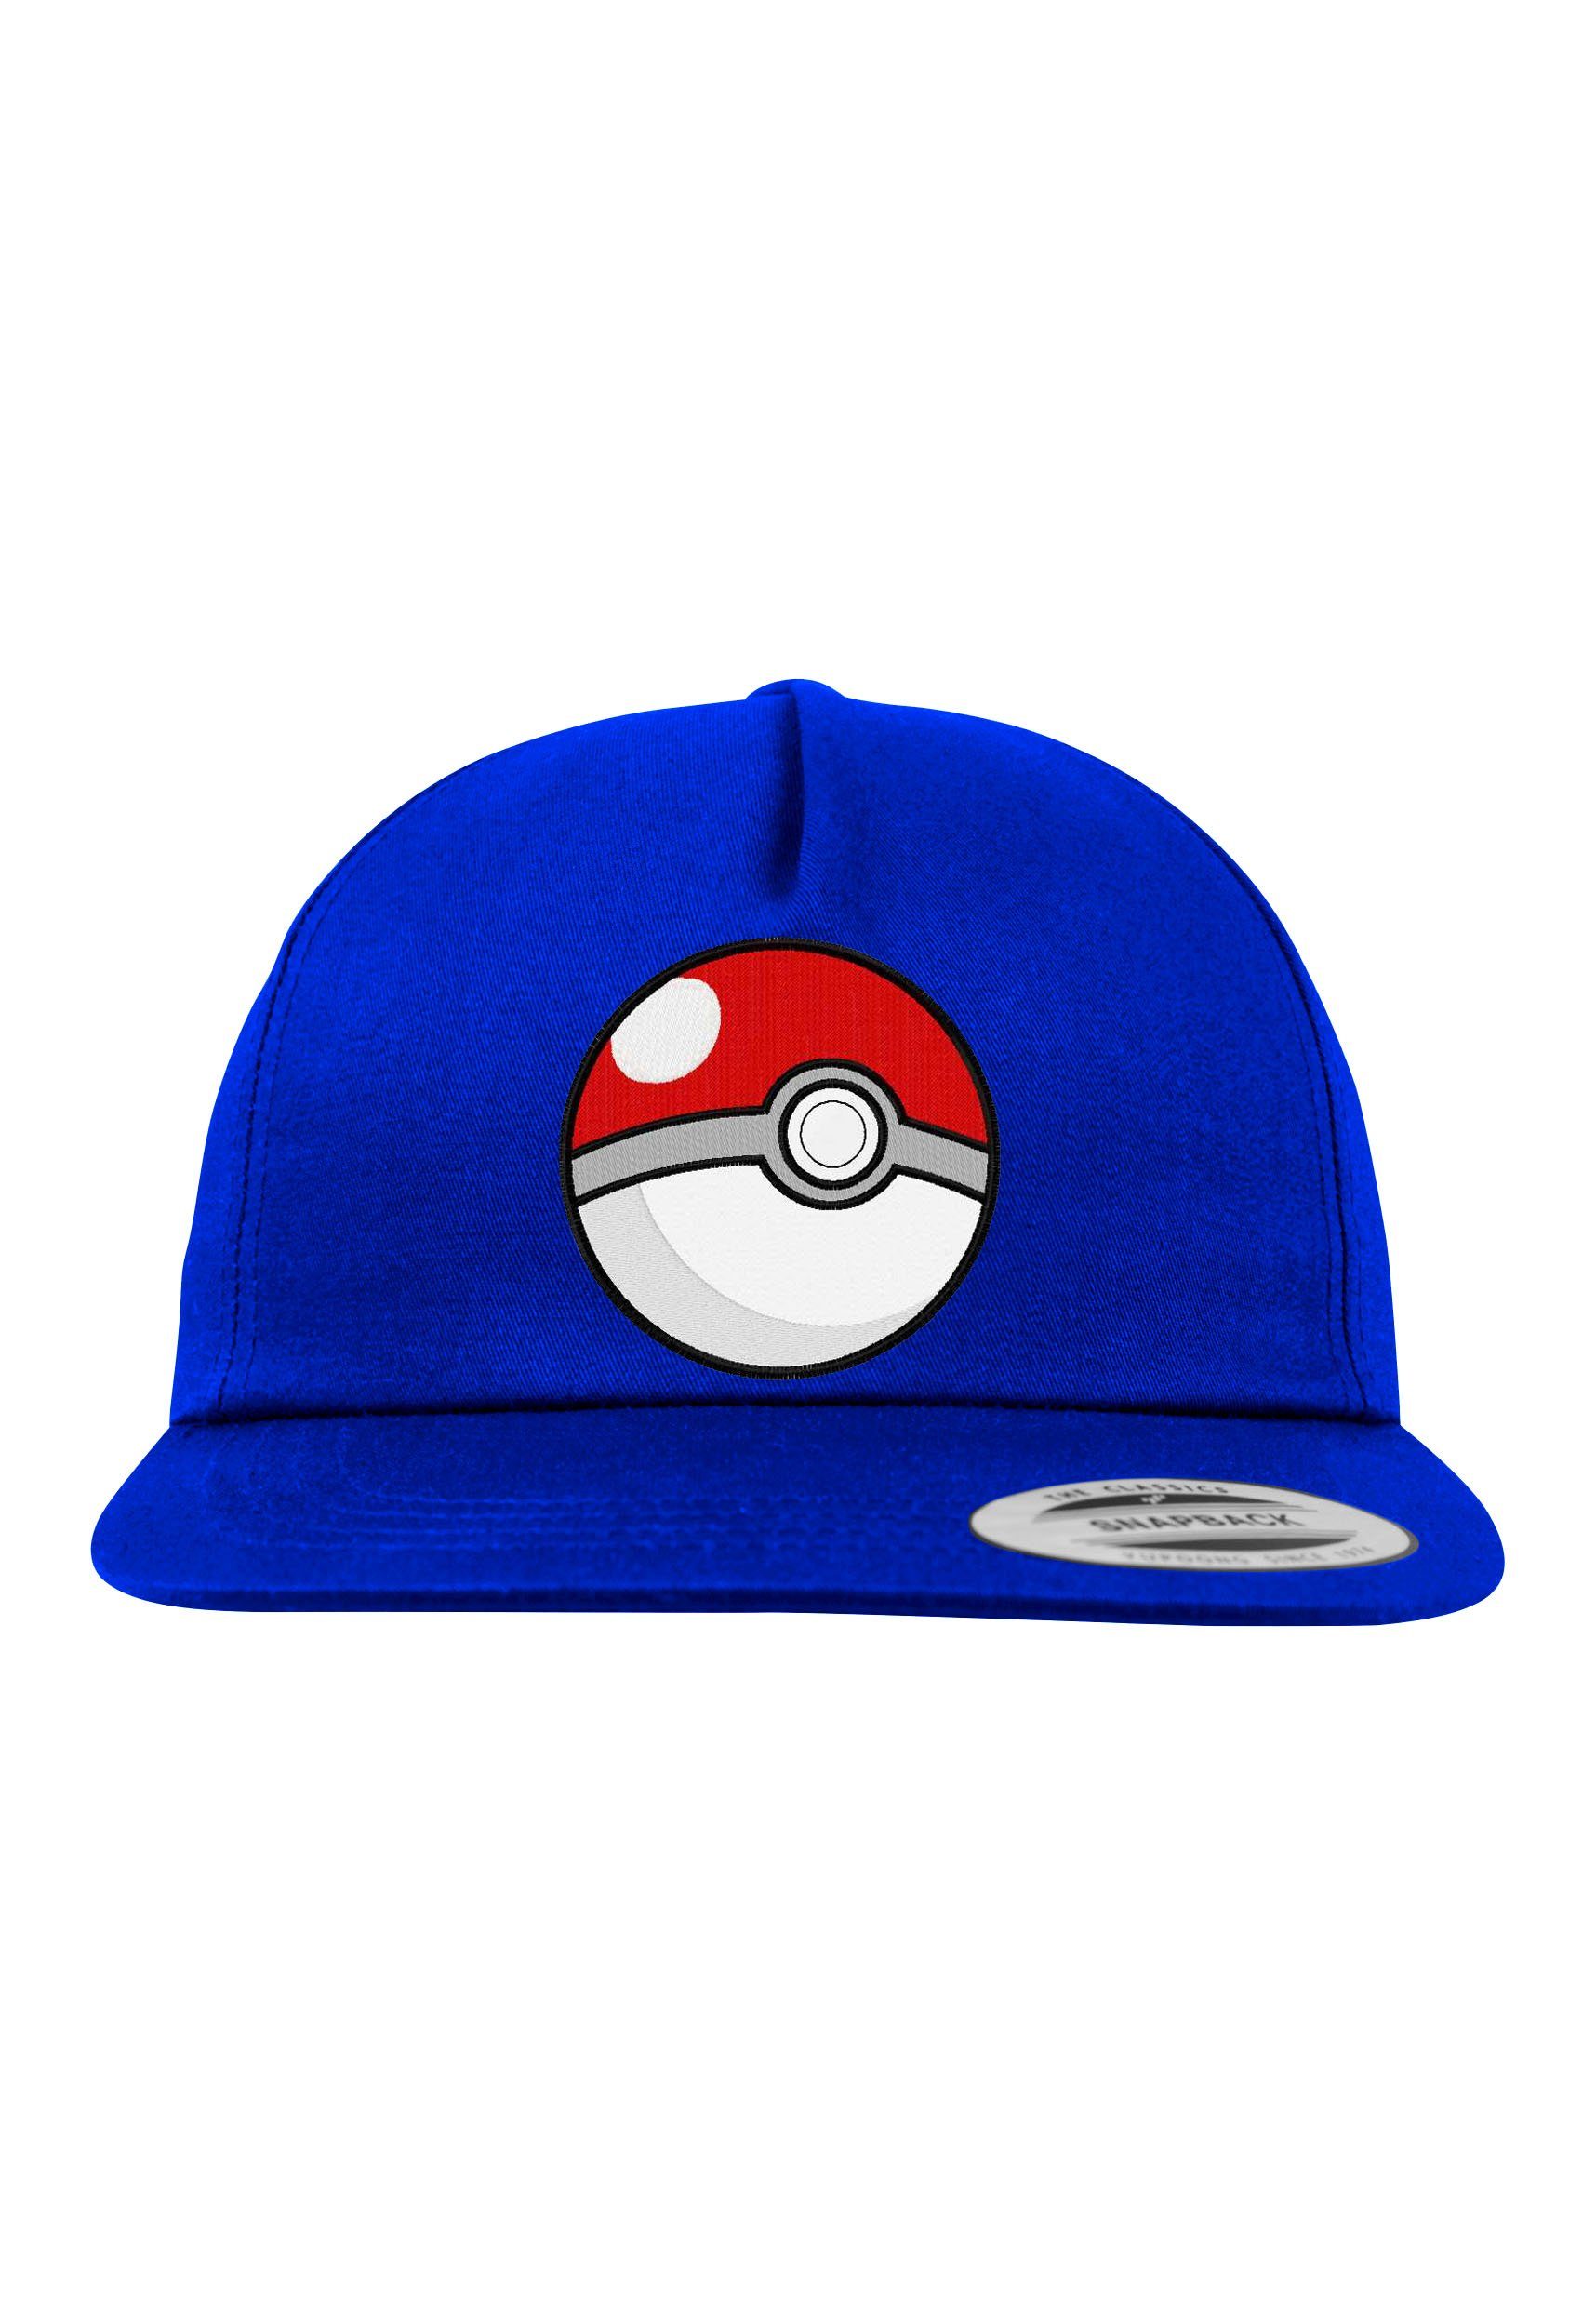 Youth Designz Baseball Cap Poke Ball Unisex Snapback Cap mit modischer Logo Stickerei Royalblau